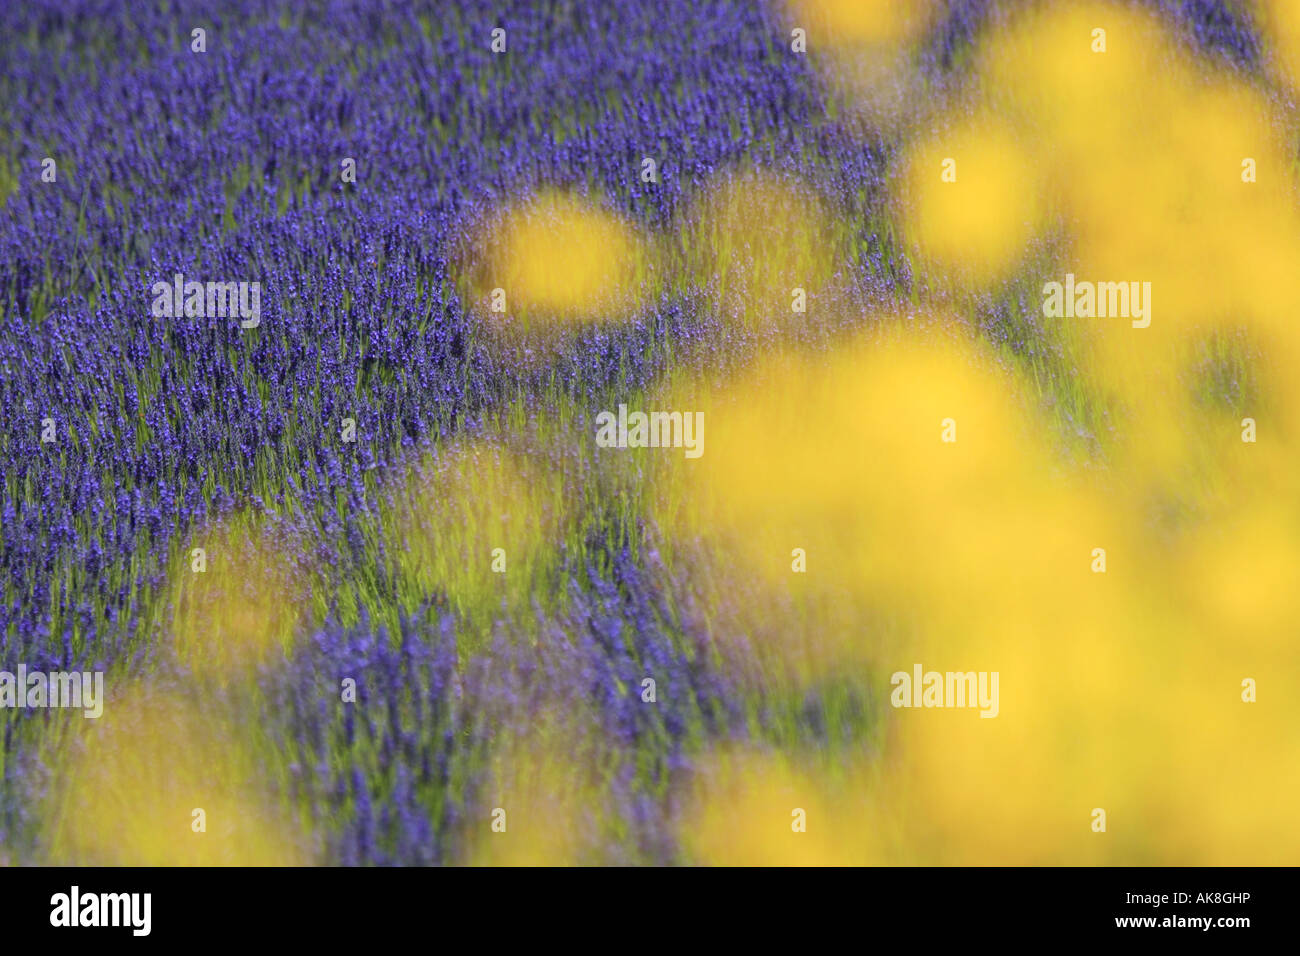 lavender (Lavandula angustifolia), lavender field, France, Provence, Vaucluse Stock Photo